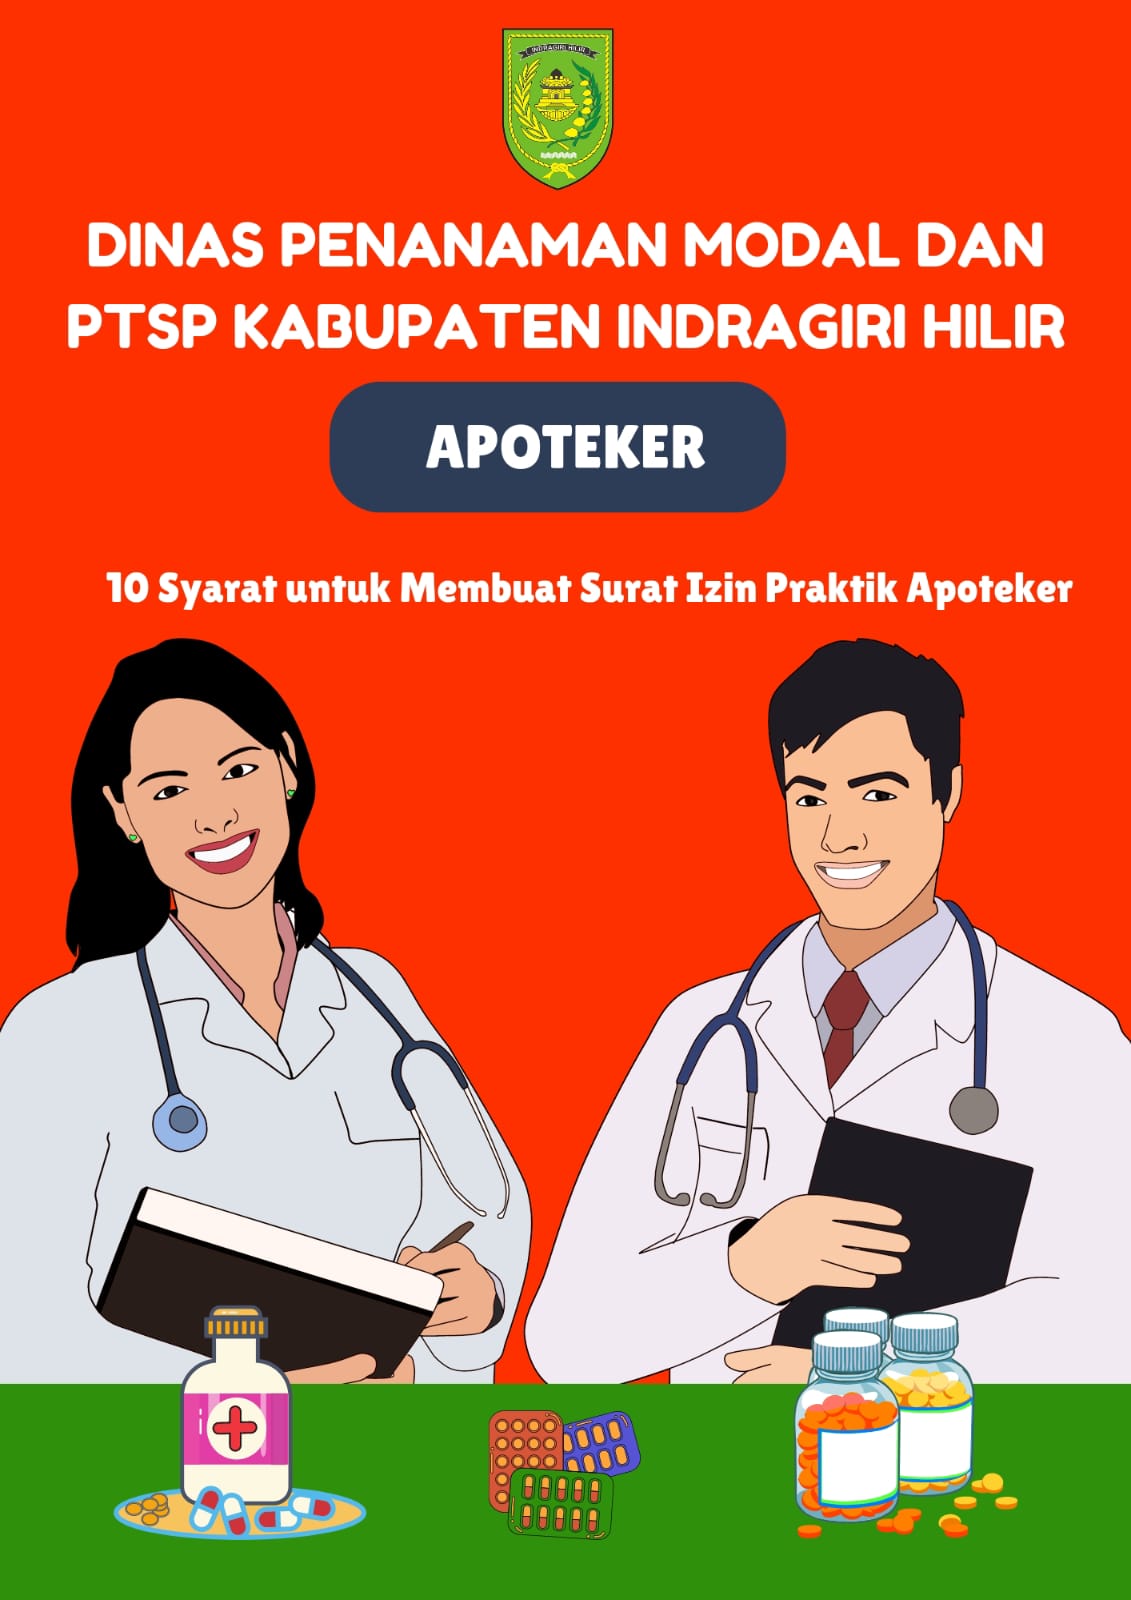 DPMPTSP Inhil: Cuman 10 Syarat untuk Membuat Surat Izin Praktik Apoteker